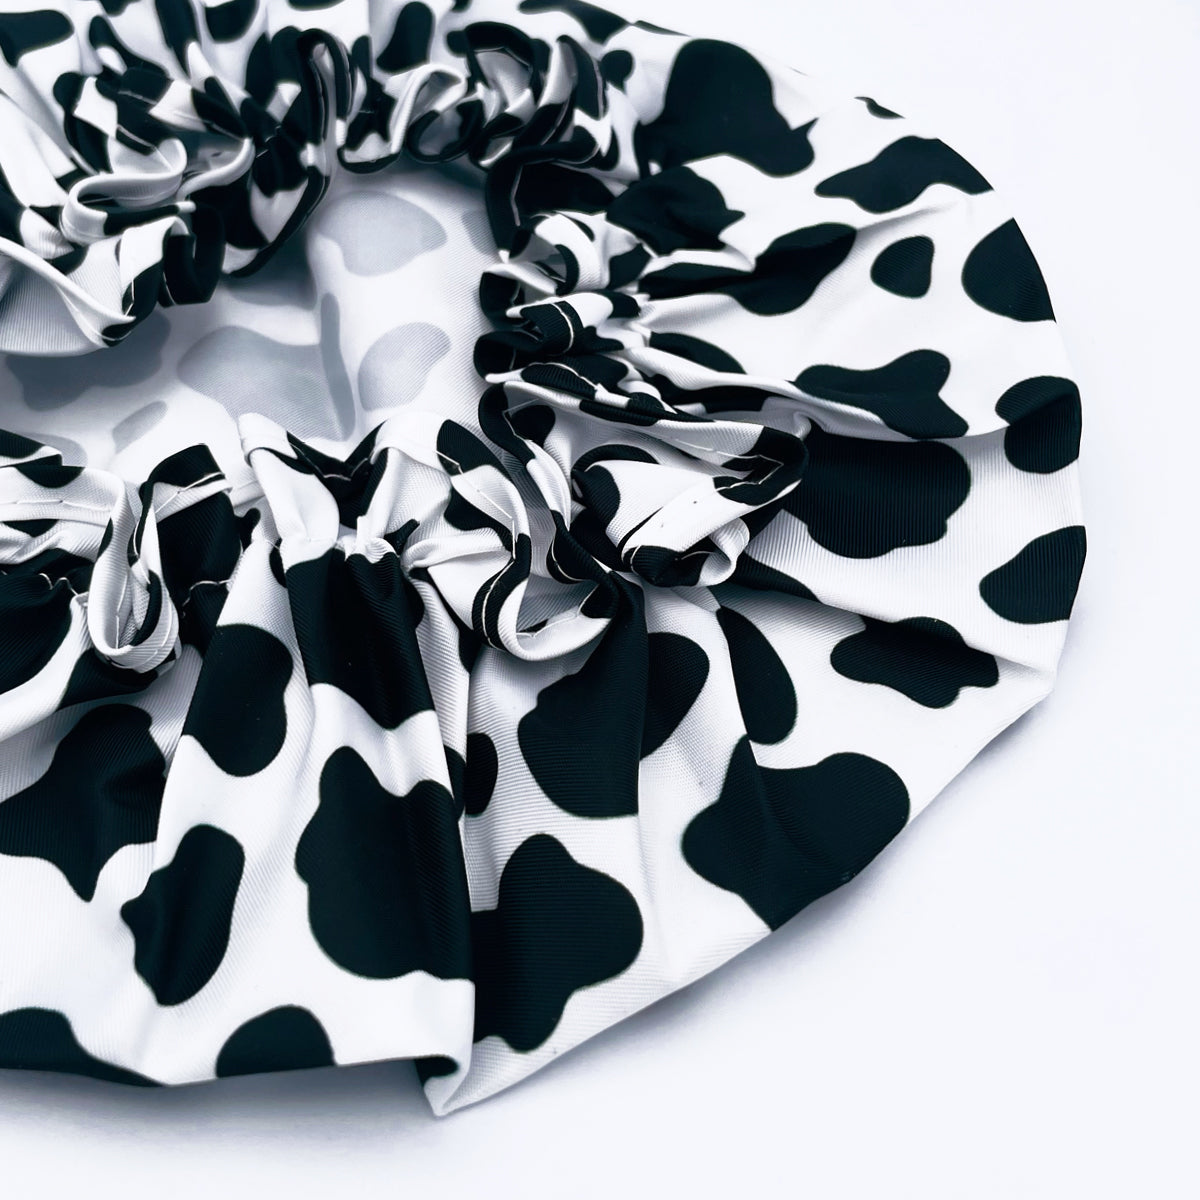 Luxury Shower Cap - Cow Print